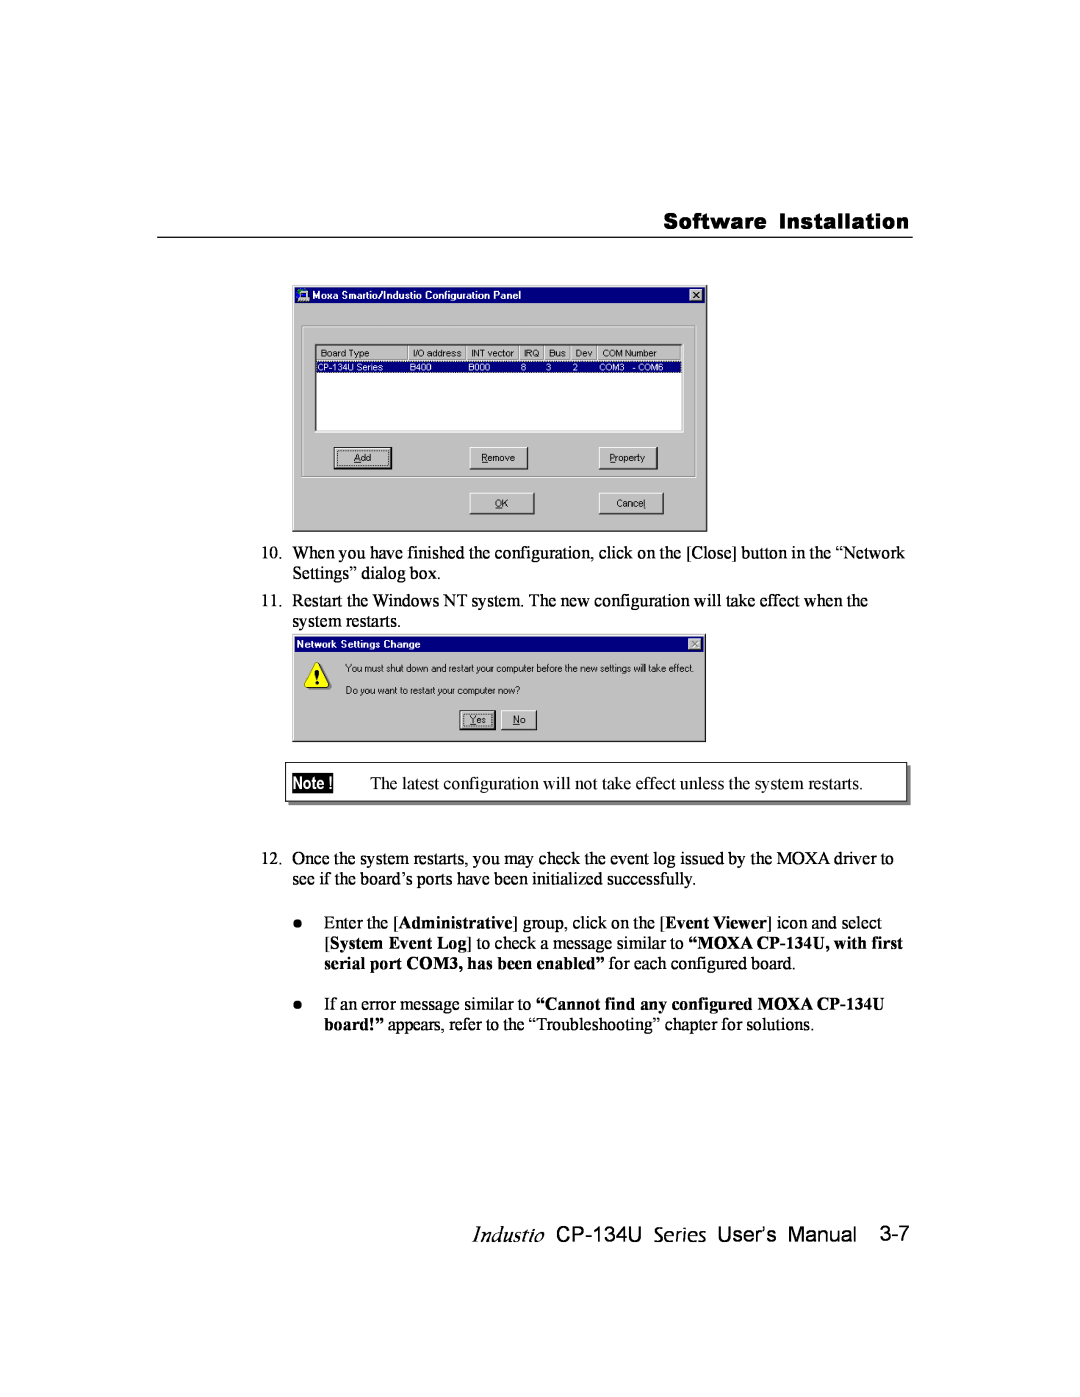 Moxa Technologies user manual Software Installation, Industio CP-134U Series User’s Manual 